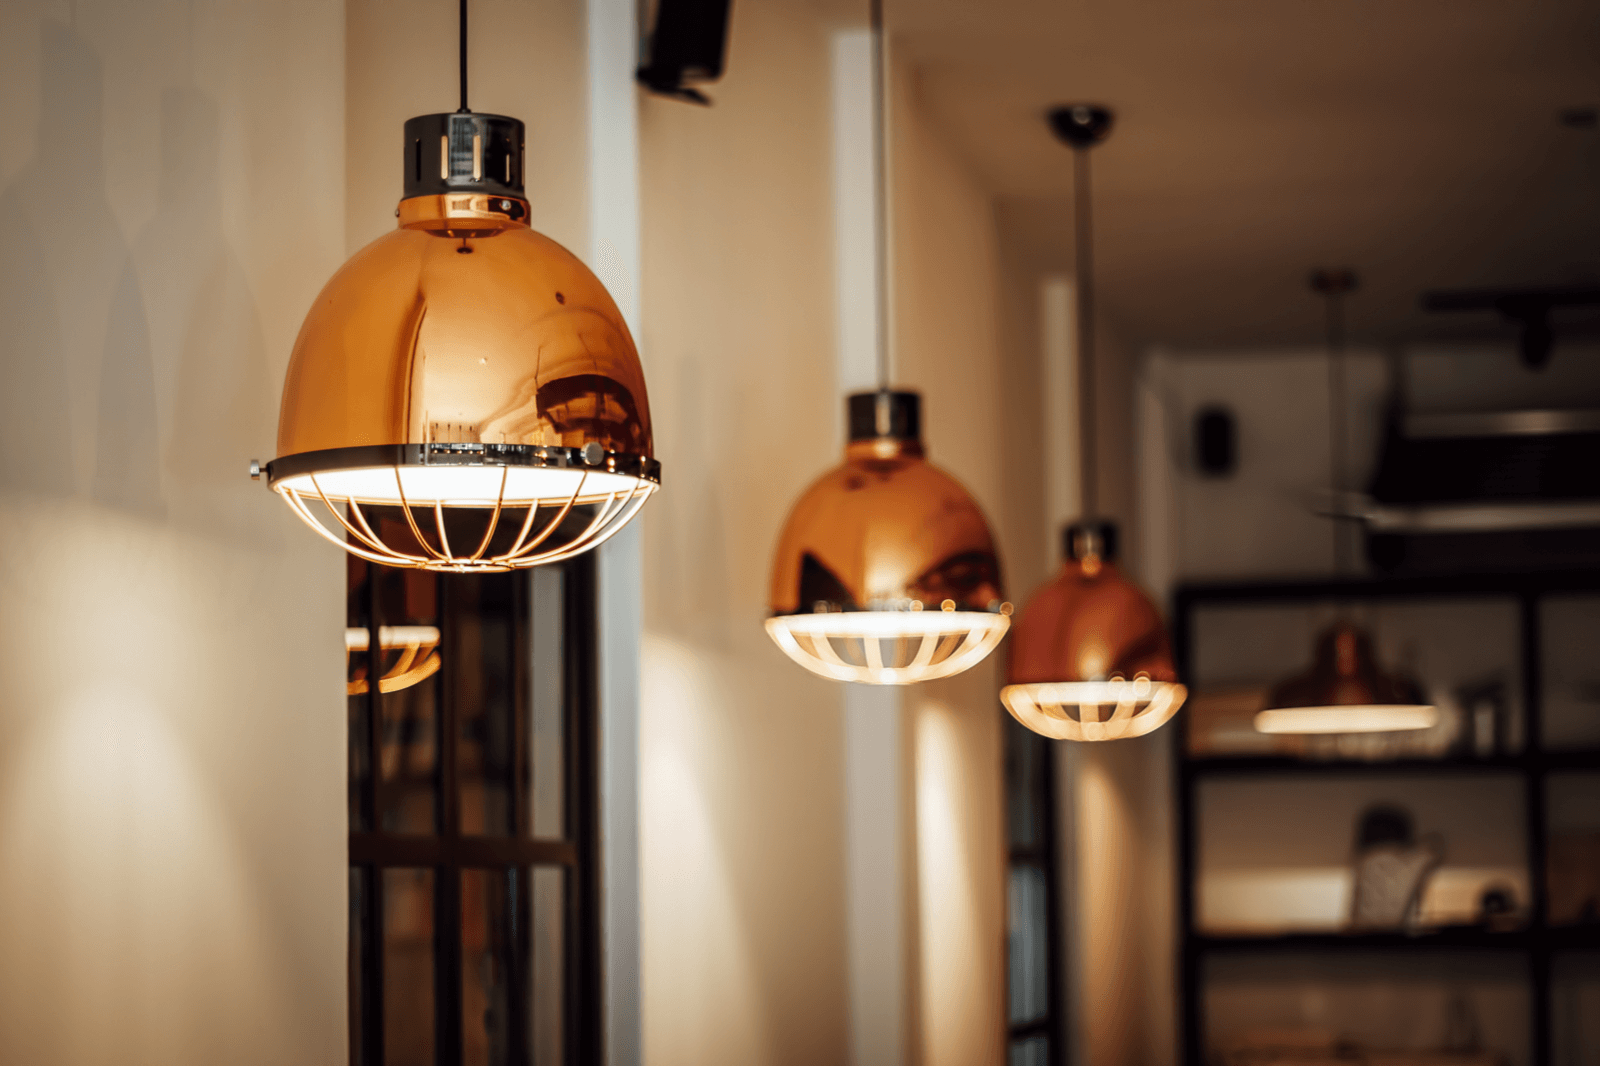 Brand new copper light fixtures